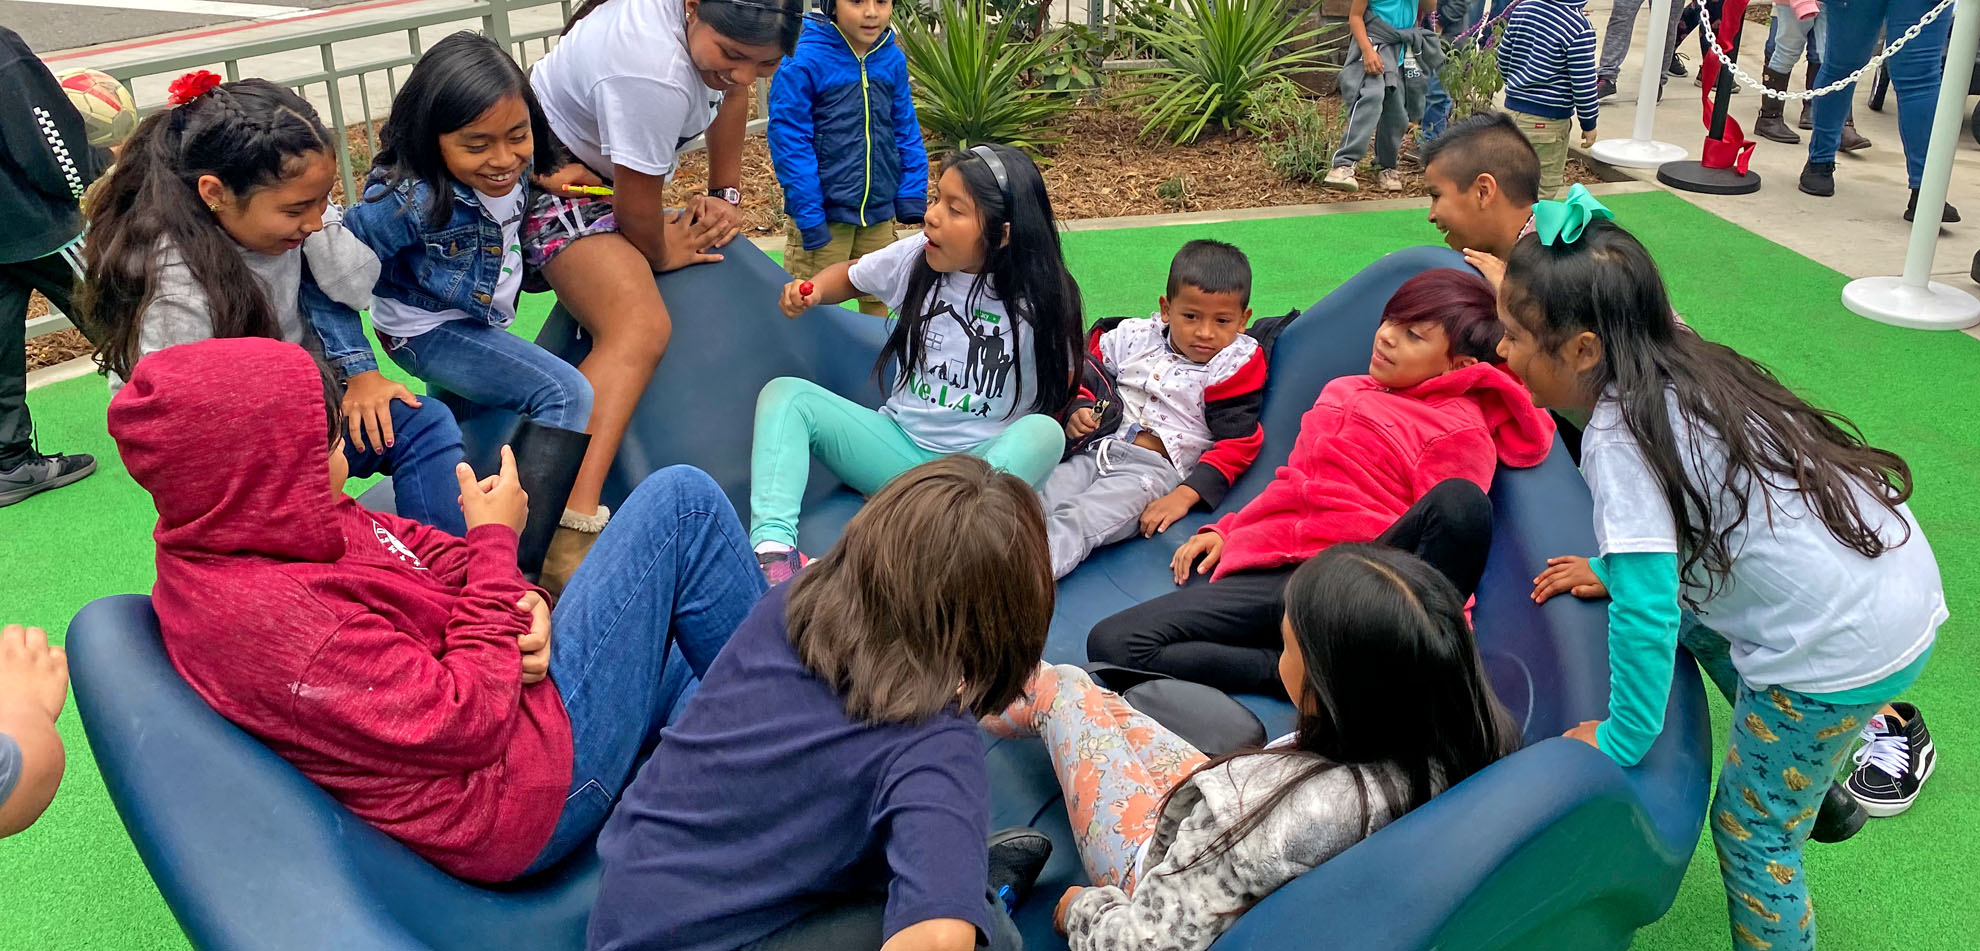 kids enjoying the new playground at Mariposa park